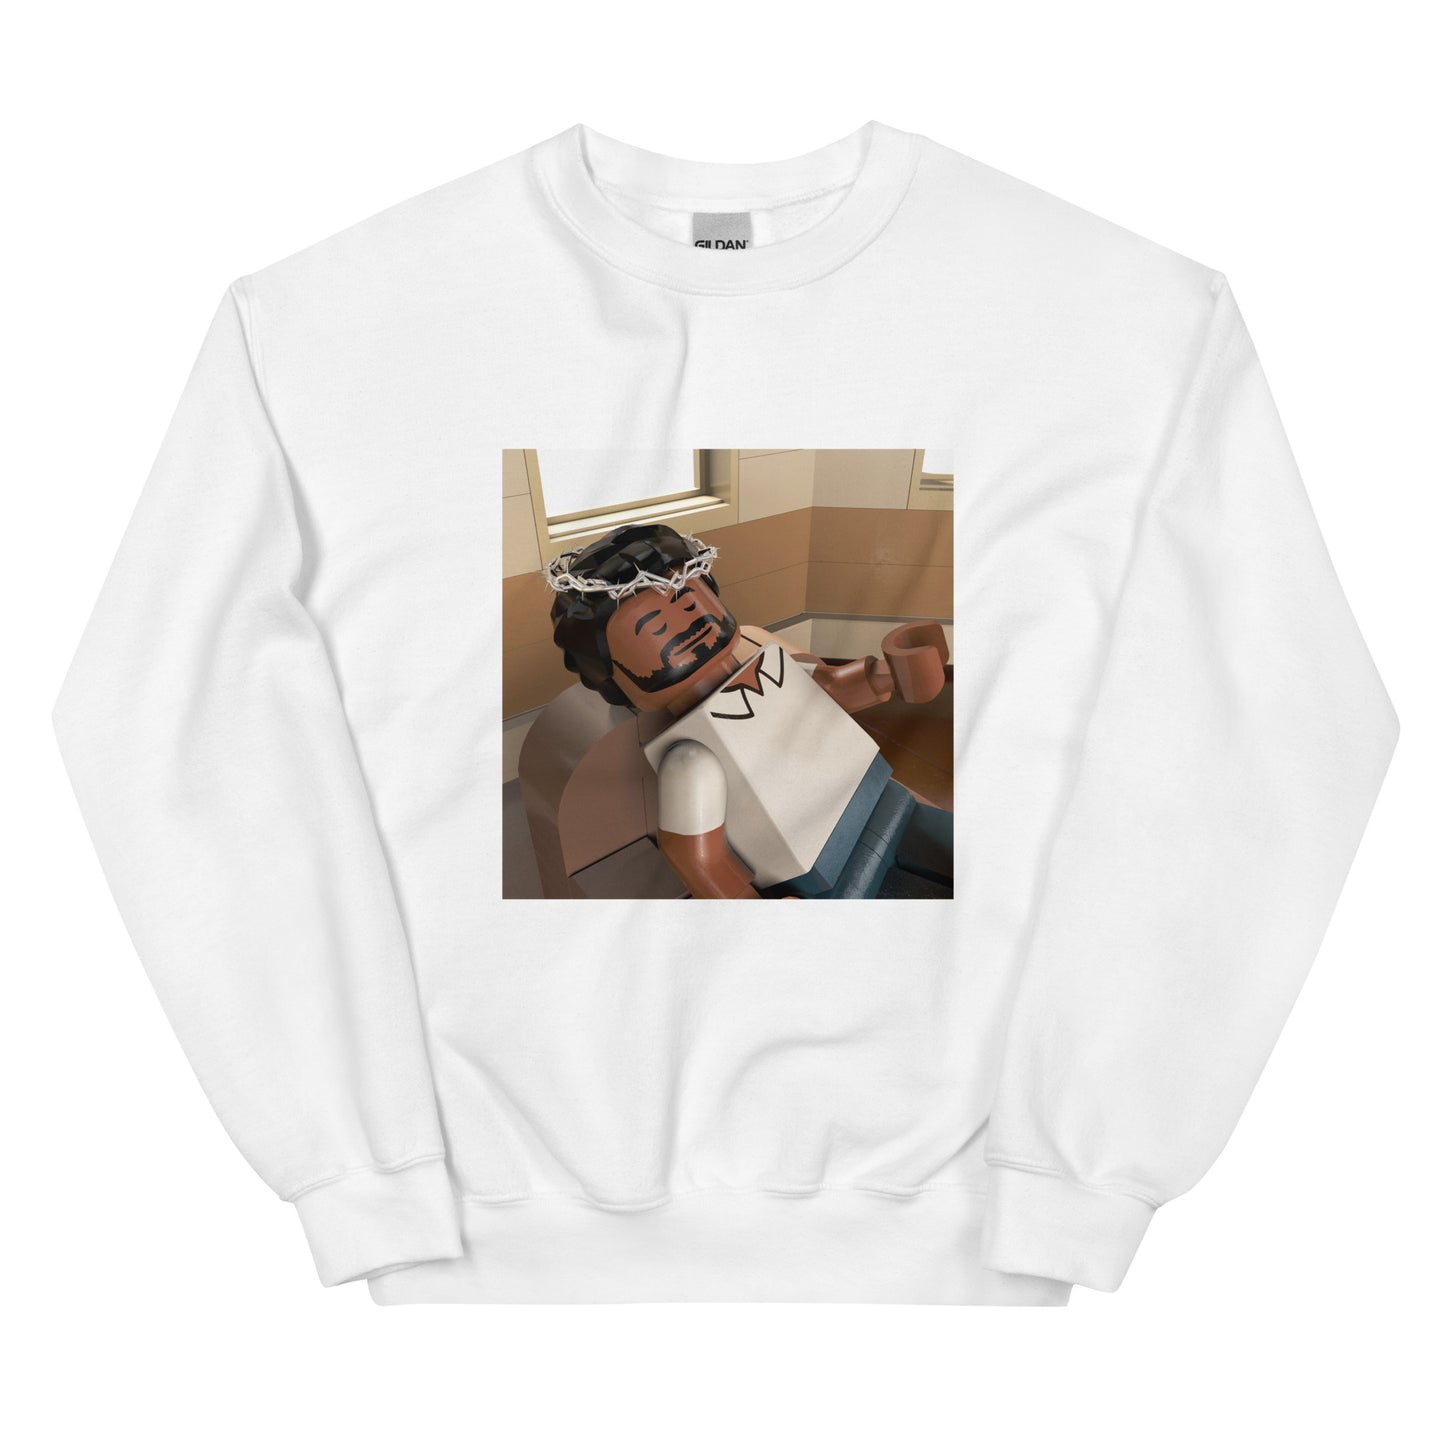 "Kendrick Lamar - Mr. Morale & the Big Steppers (Cover Shoot)" Lego Parody Sweatshirt